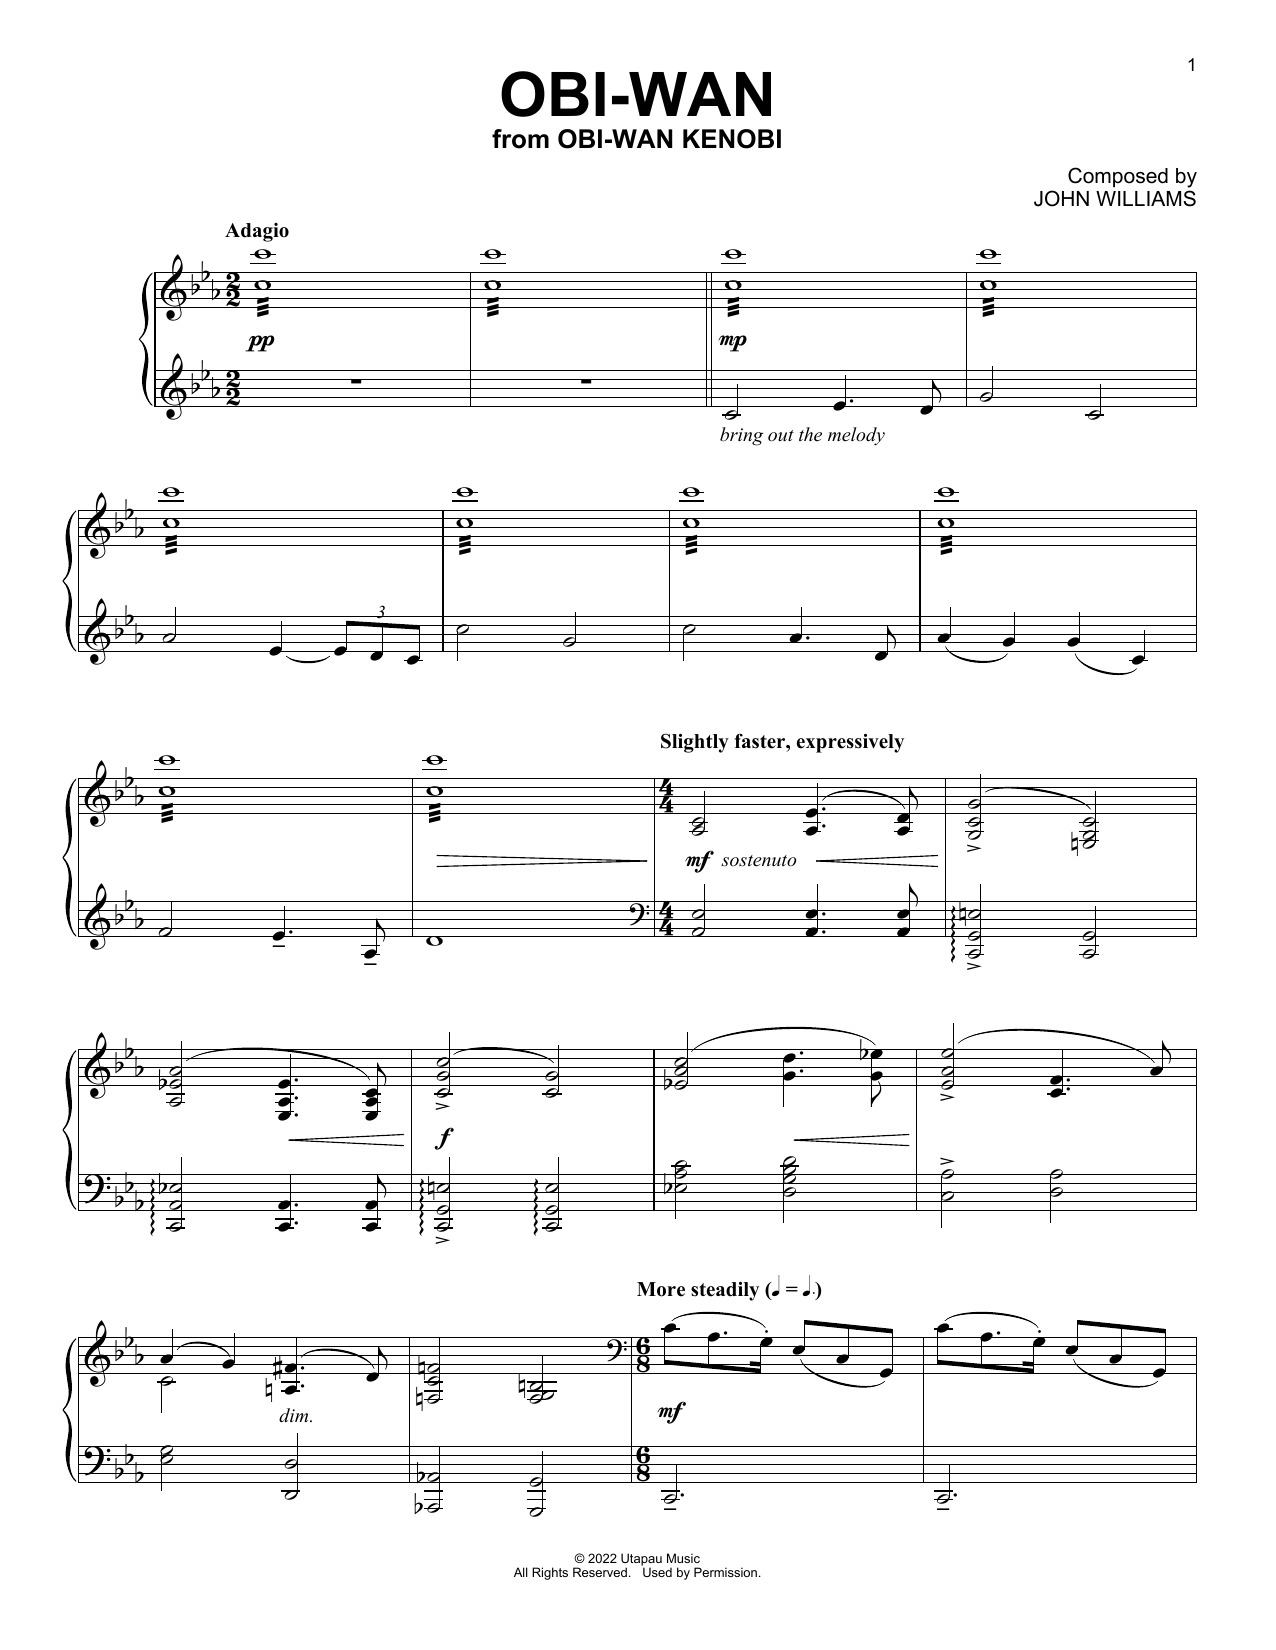 John Williams Obi-Wan (from Obi-Wan Kenobi) Sheet Music Notes & Chords for Easy Piano - Download or Print PDF